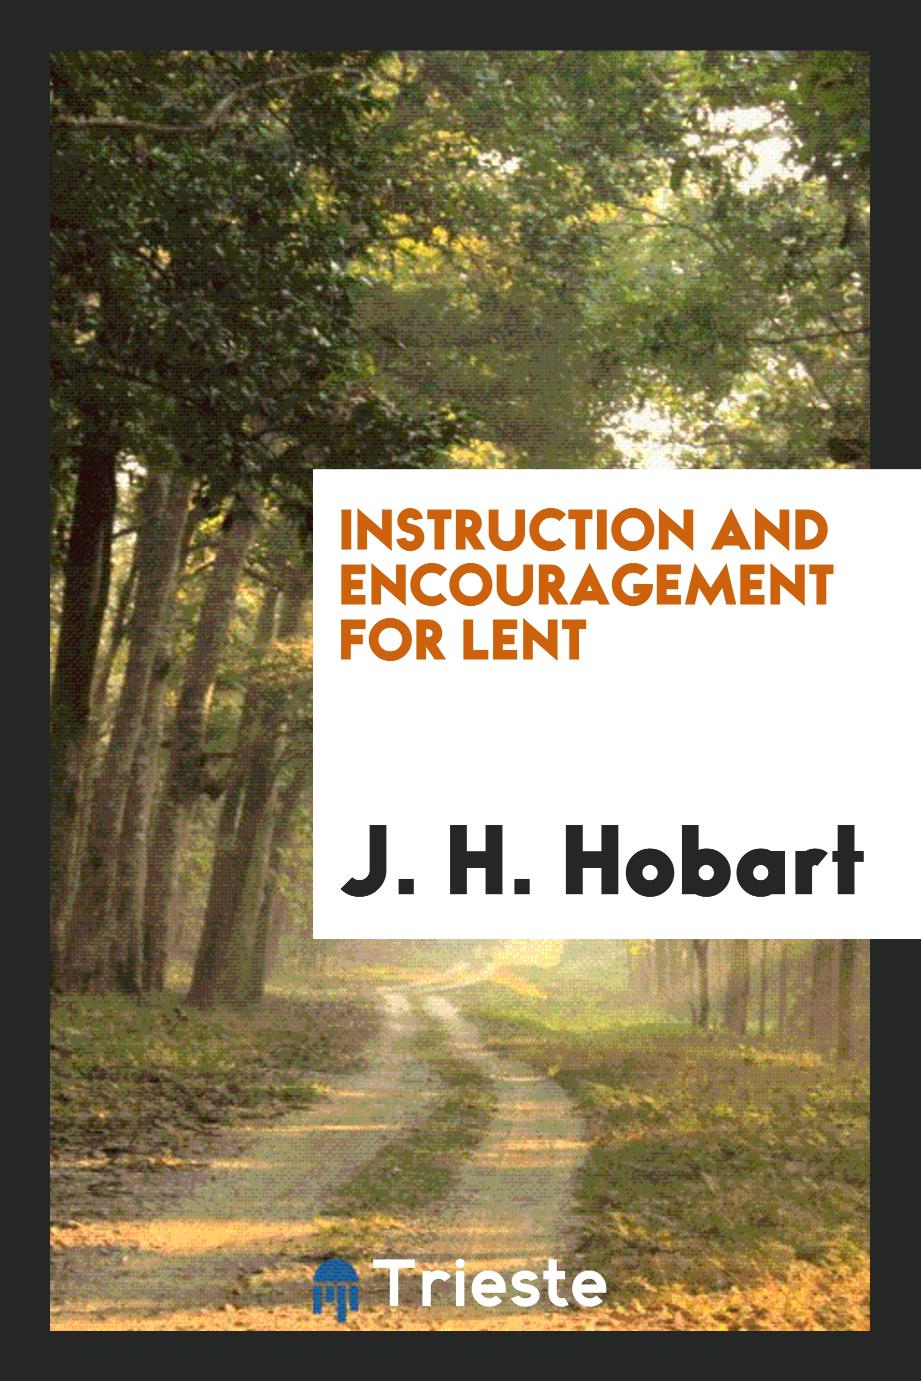 Instruction and encouragement for Lent